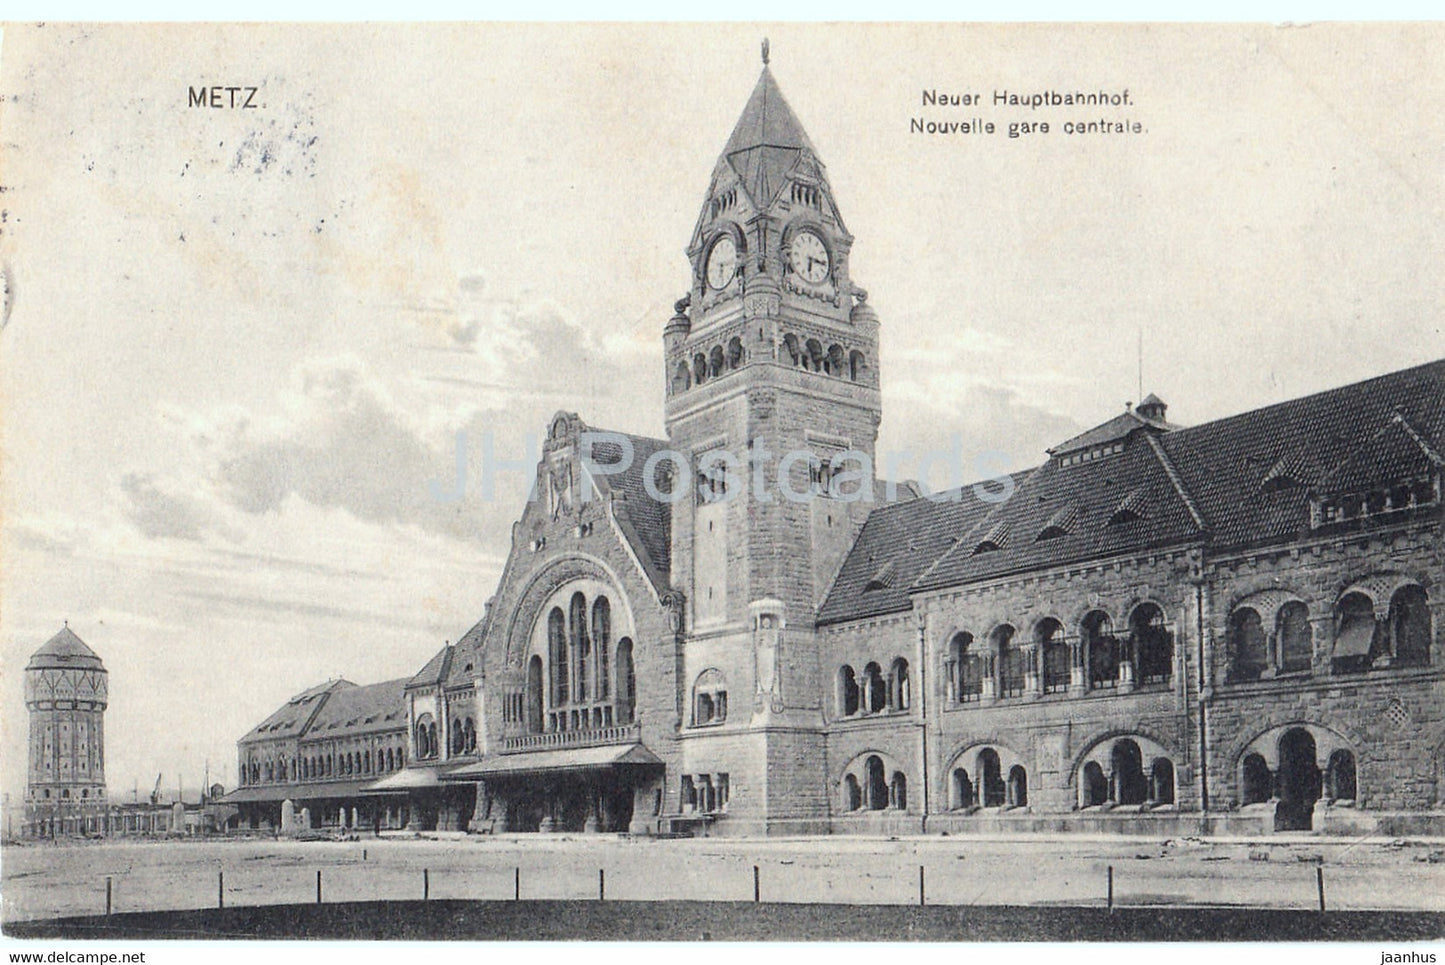 Metz - Neuer Hauptbahnhof - Nouvelle gare centrale - railway station - old postcard - 1913 - France - used - JH Postcards